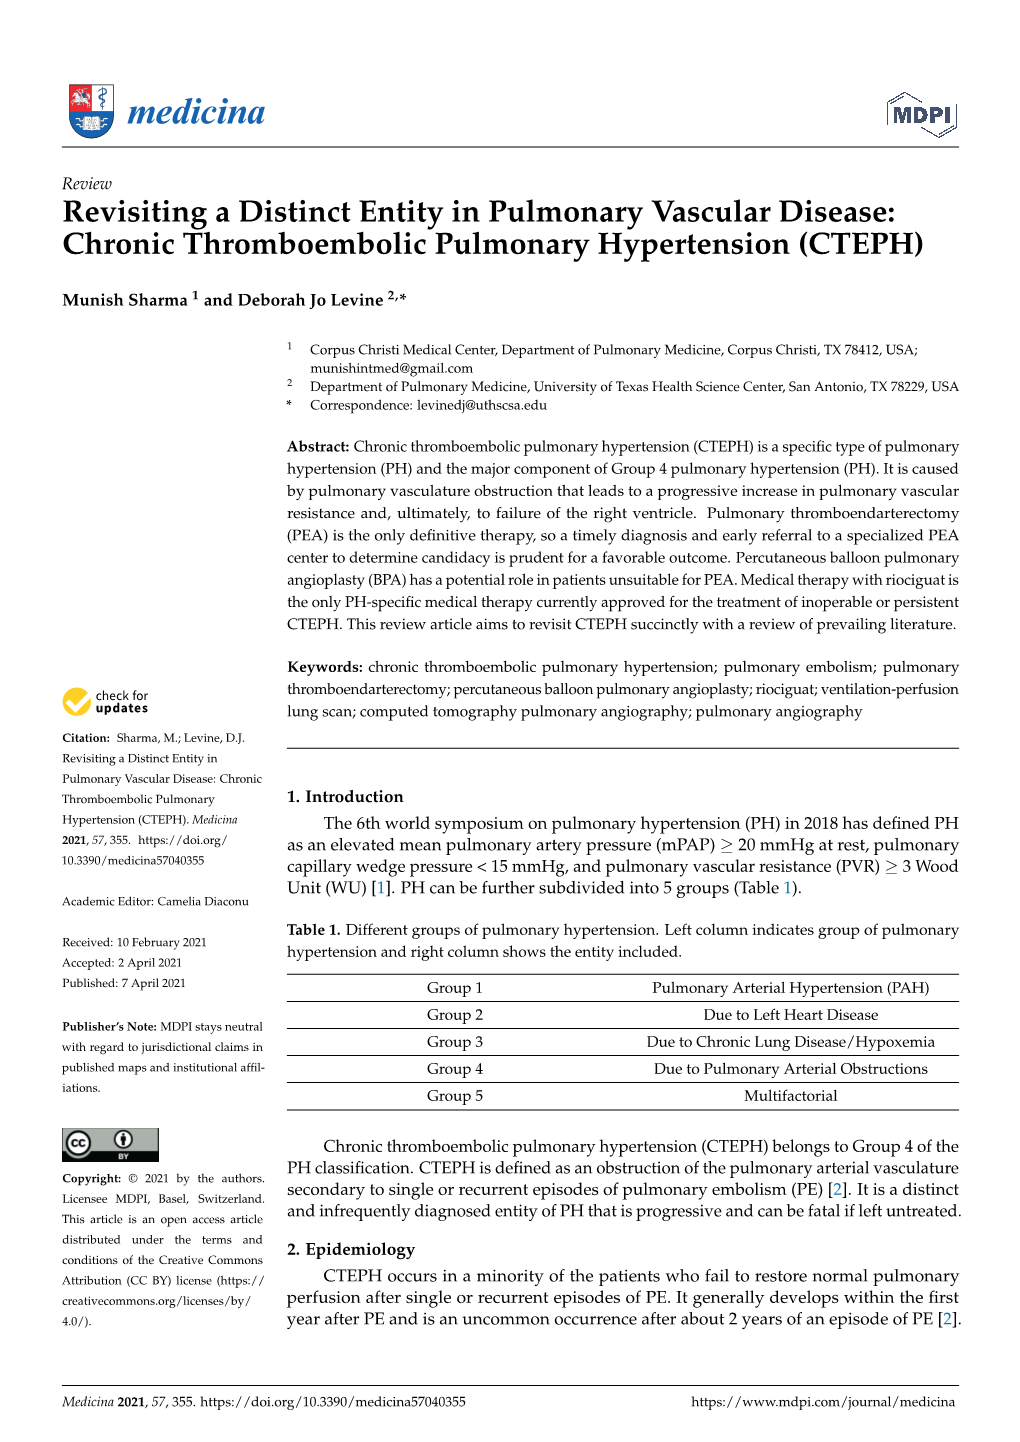 Chronic Thromboembolic Pulmonary Hypertension (CTEPH)